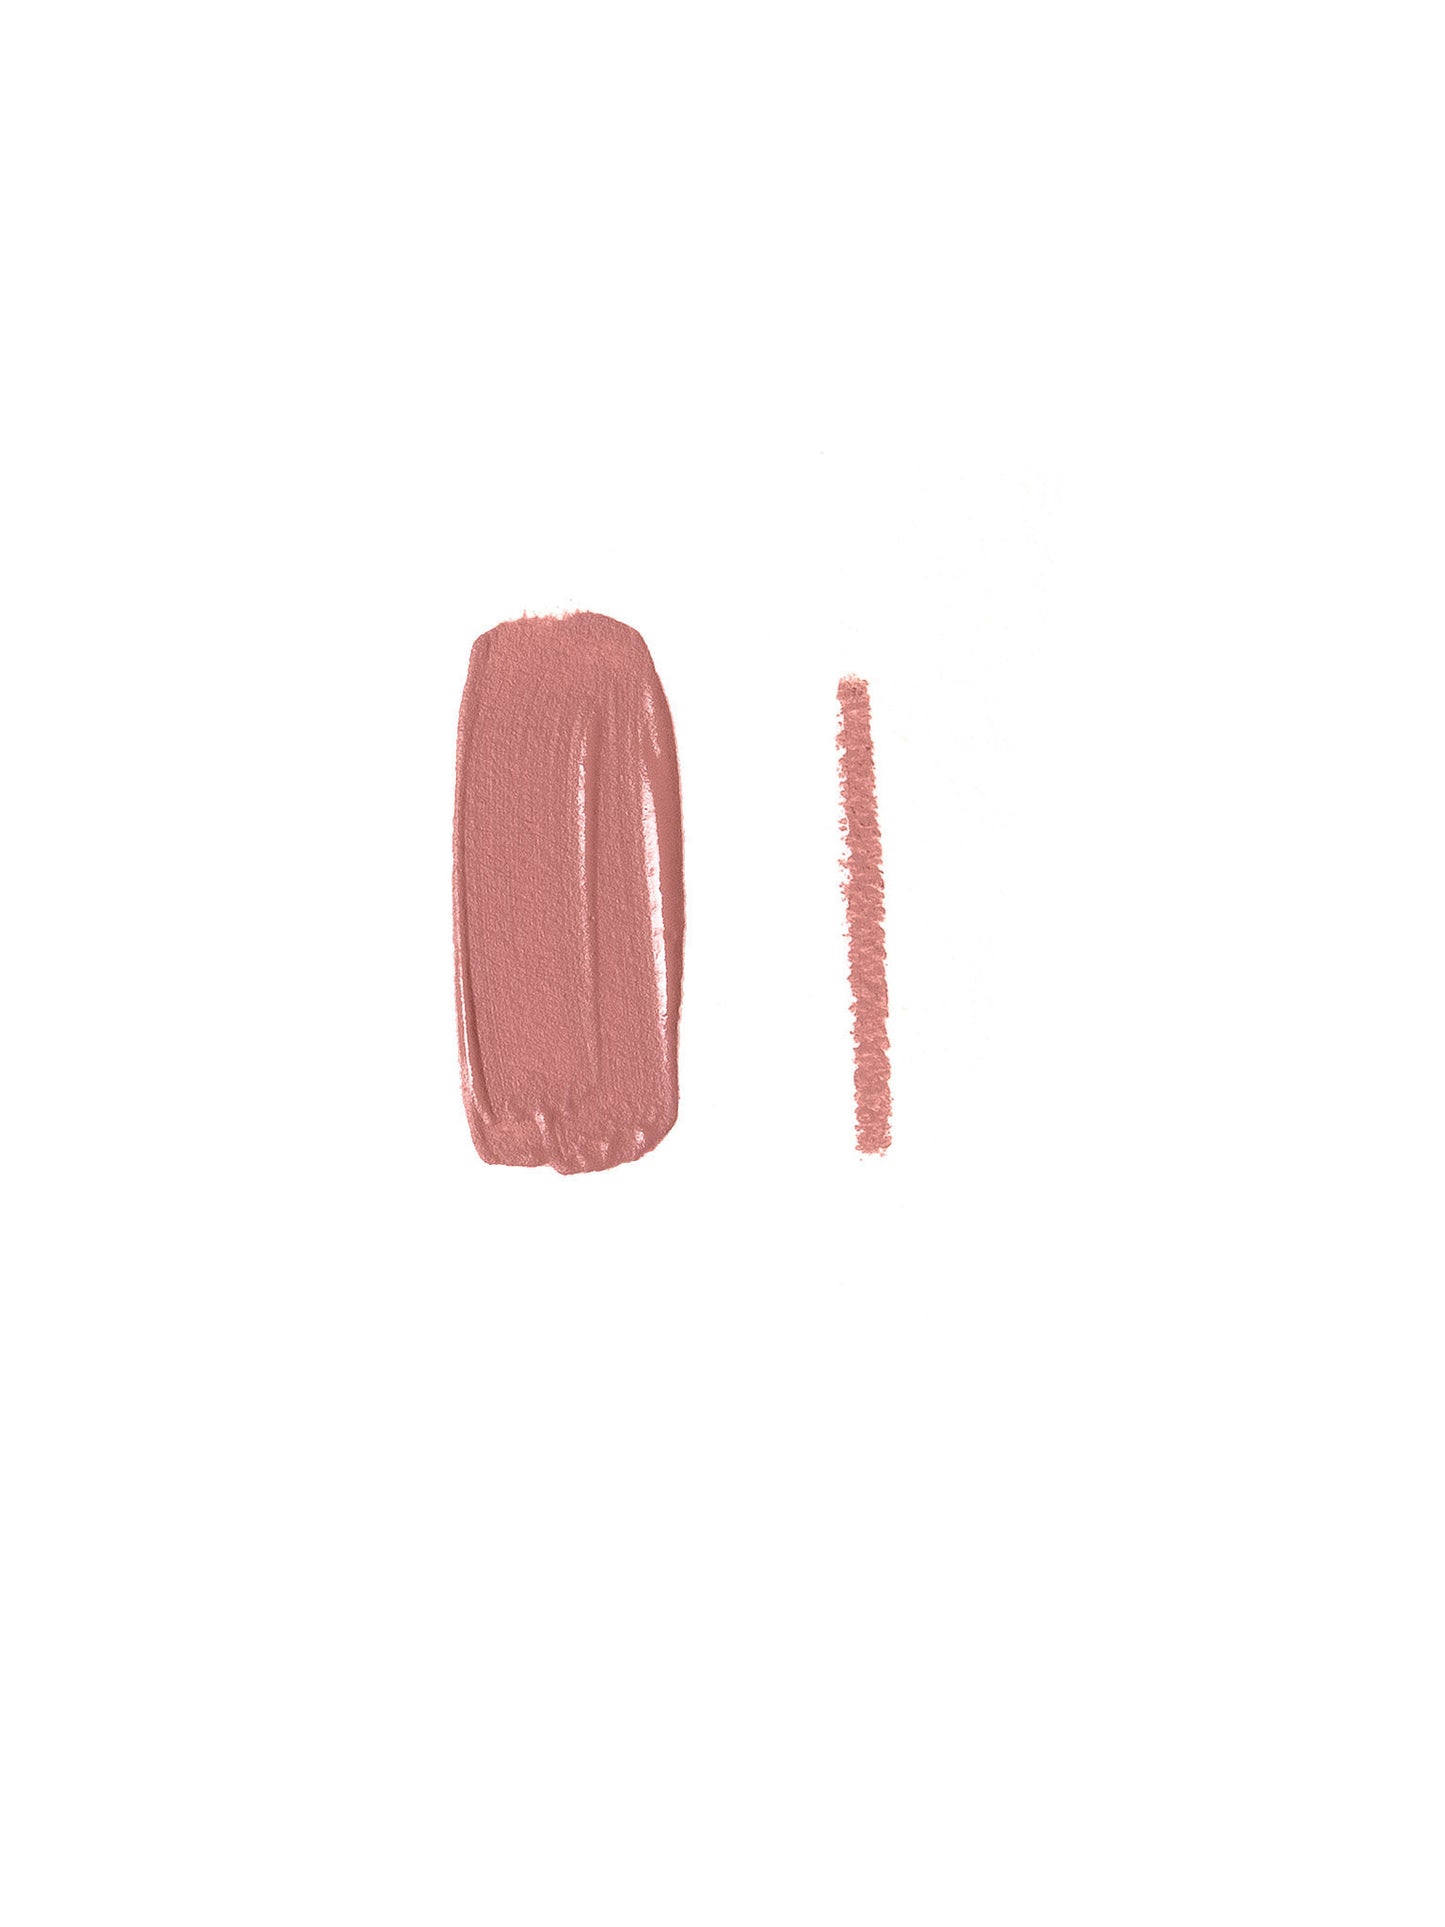 Kylie Cosmetics Velvet Liquid Lipstick and Lip Liner - Charm